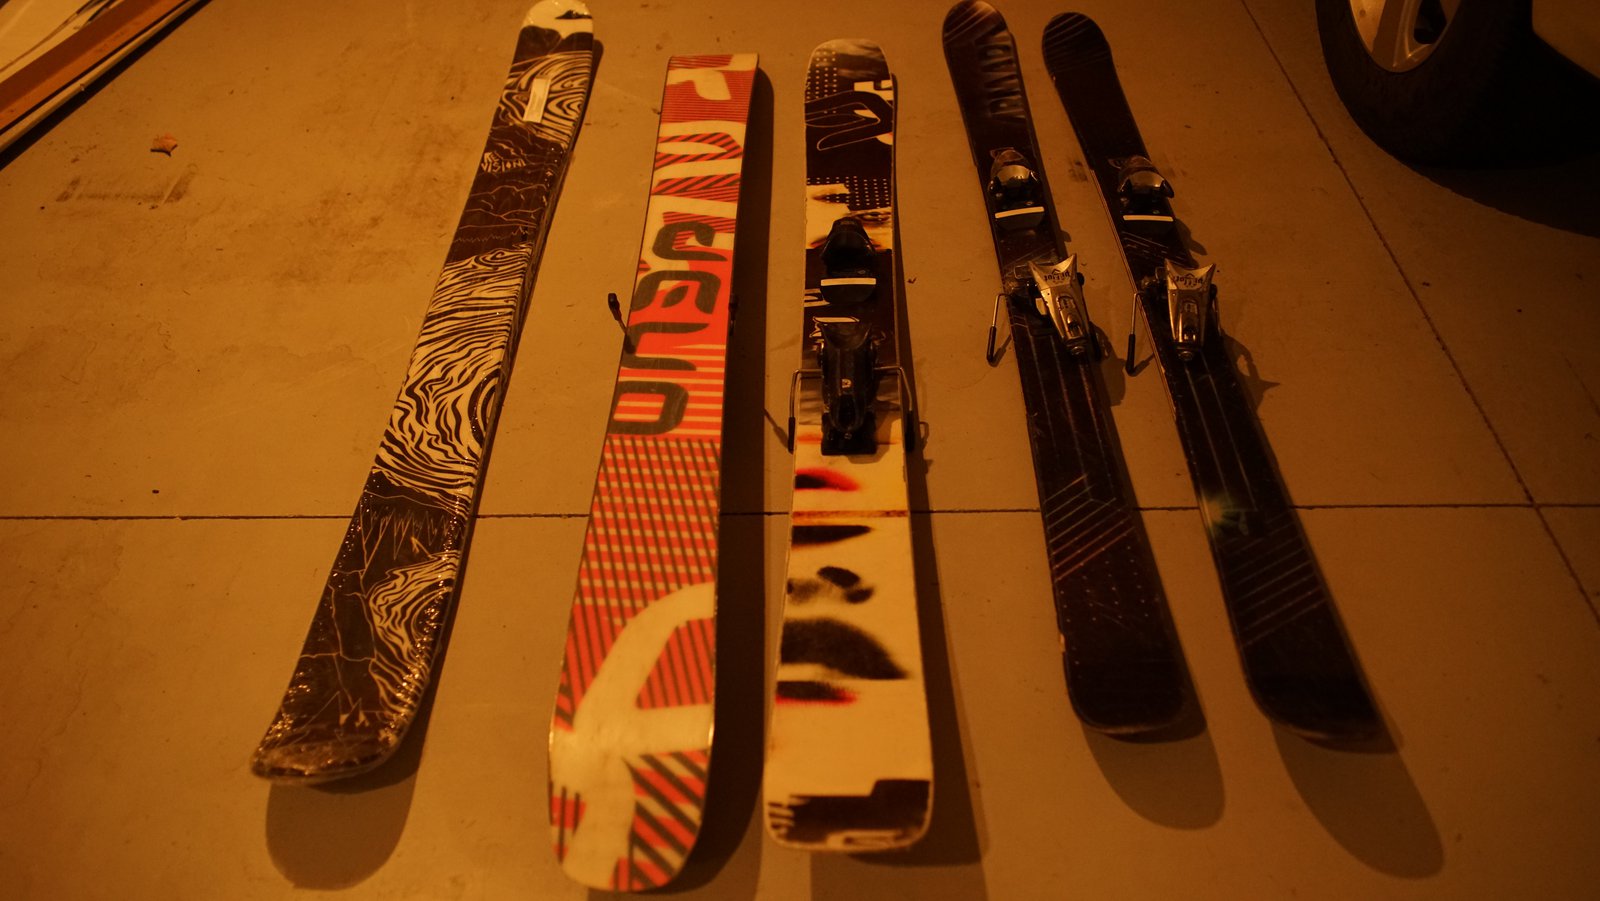 Old skis